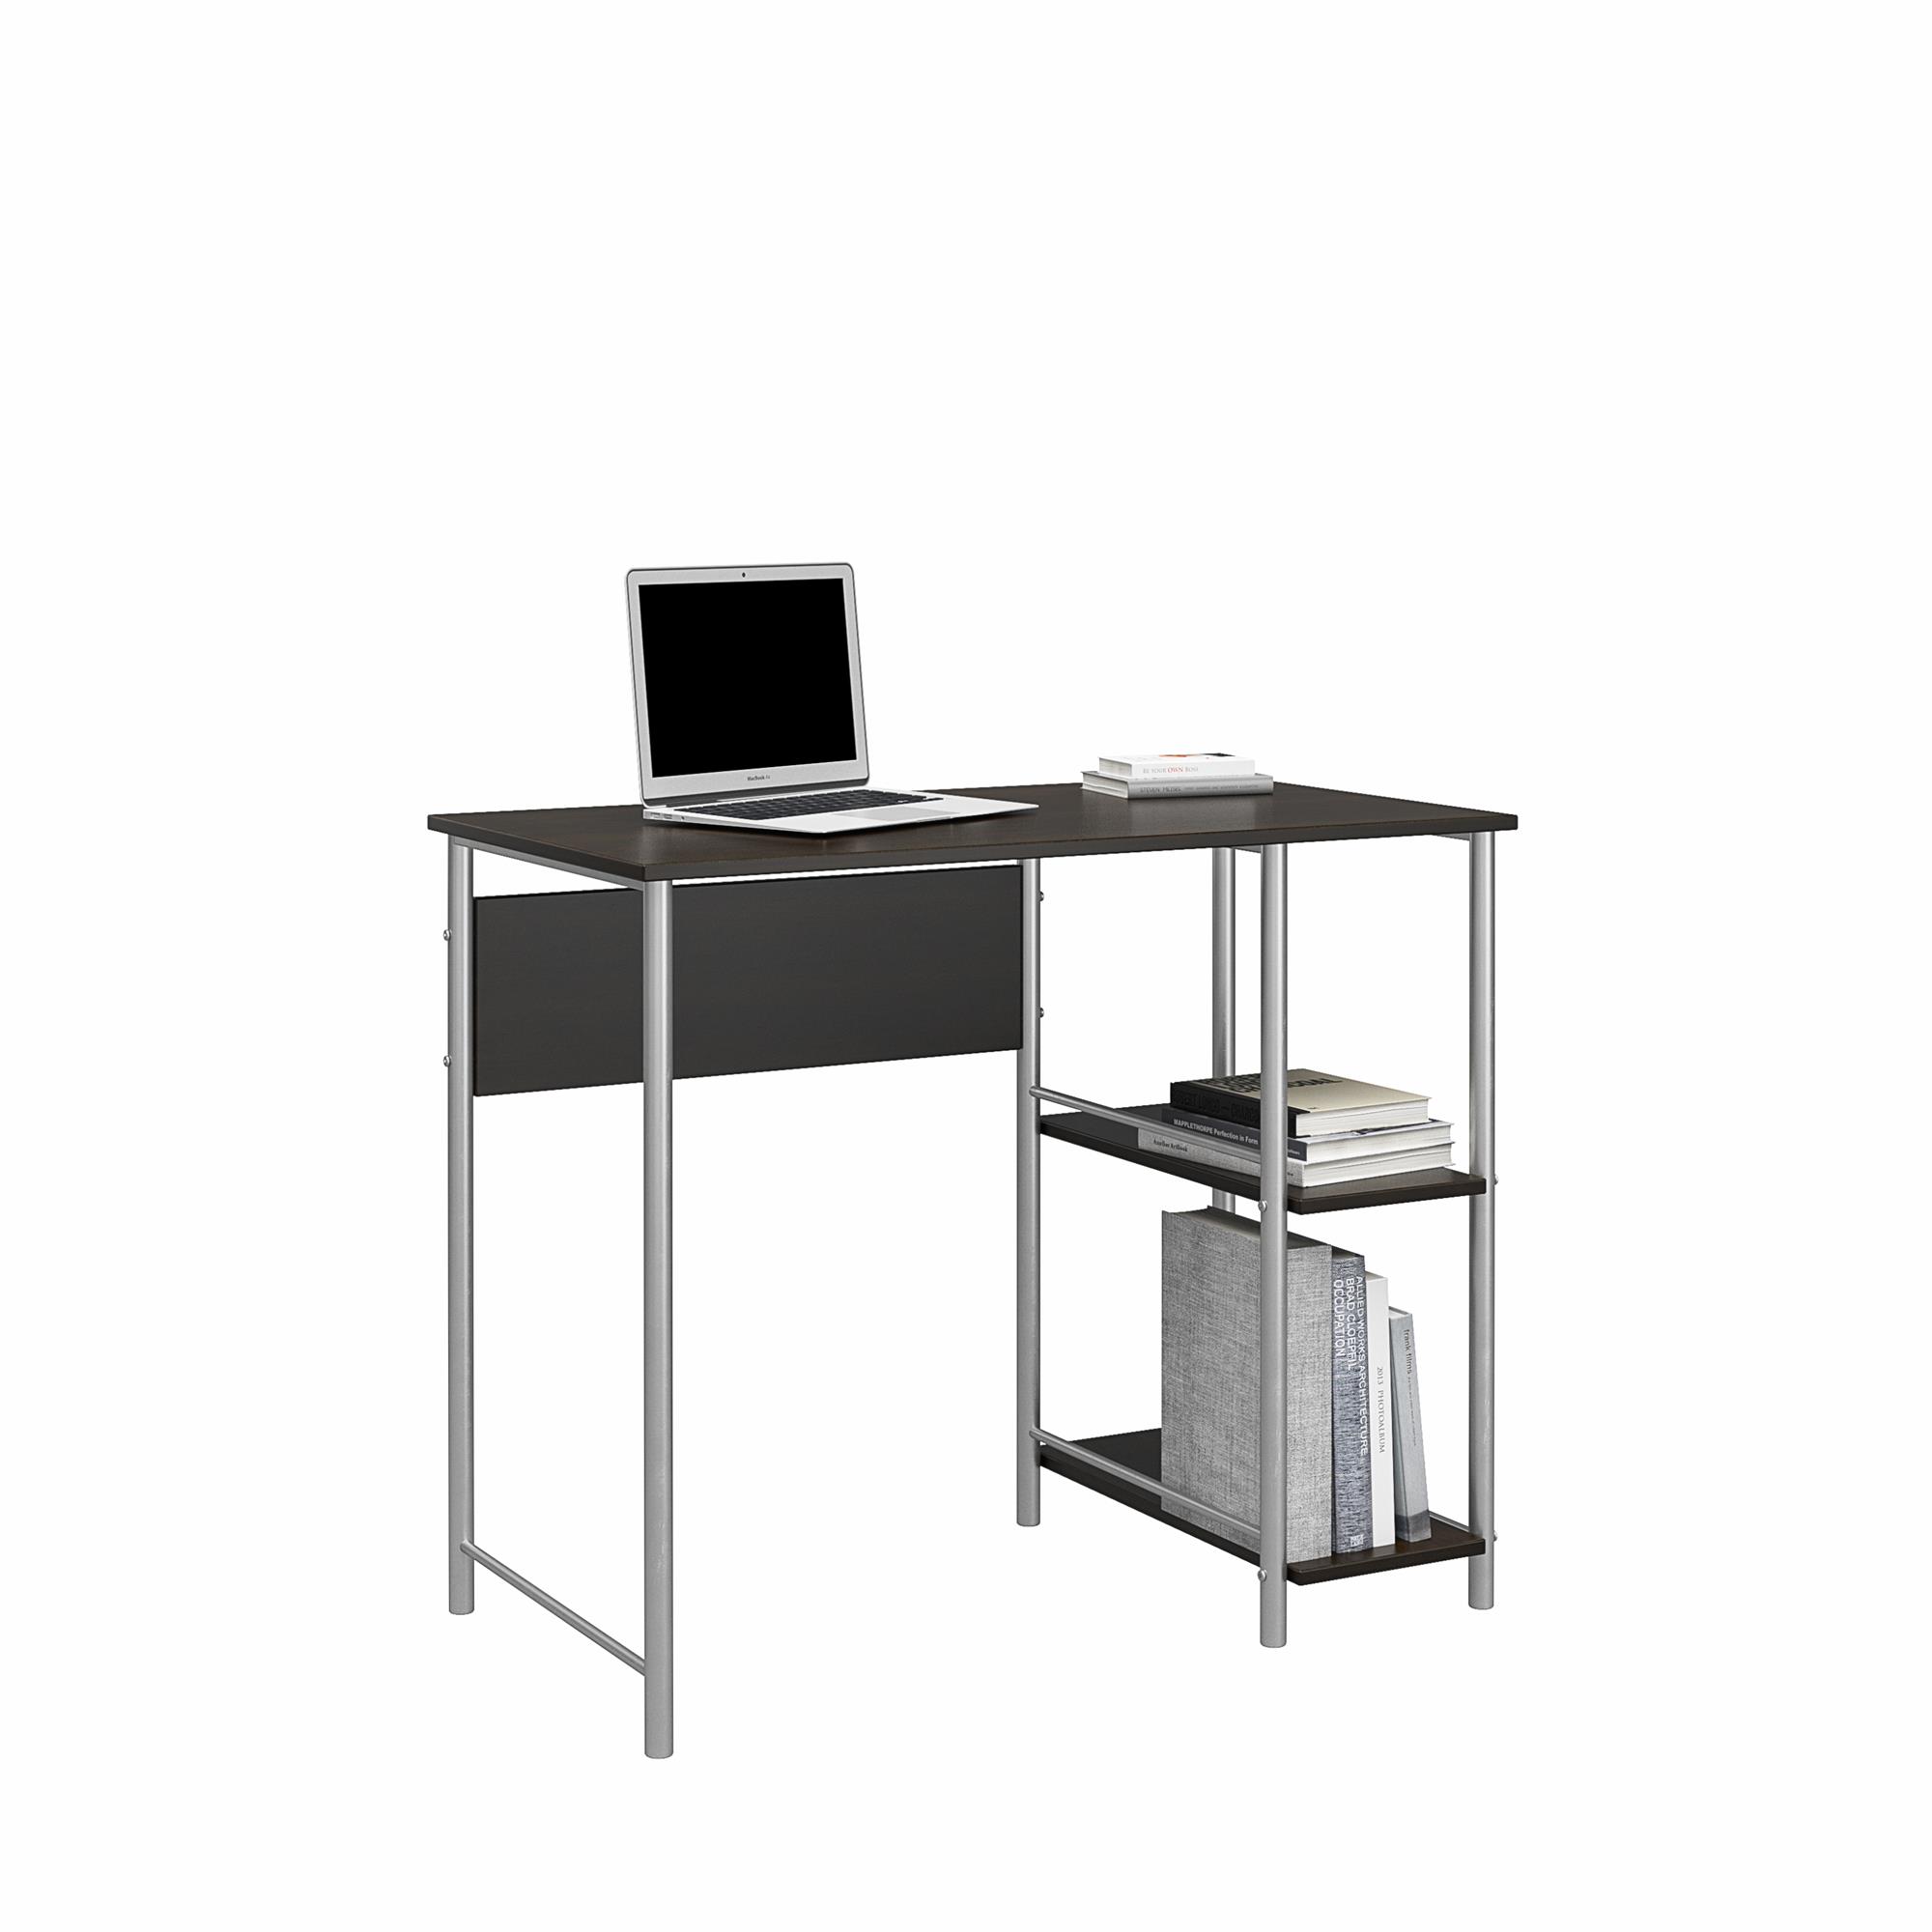 Mainstays Student Desk, Espresso - image 3 of 8